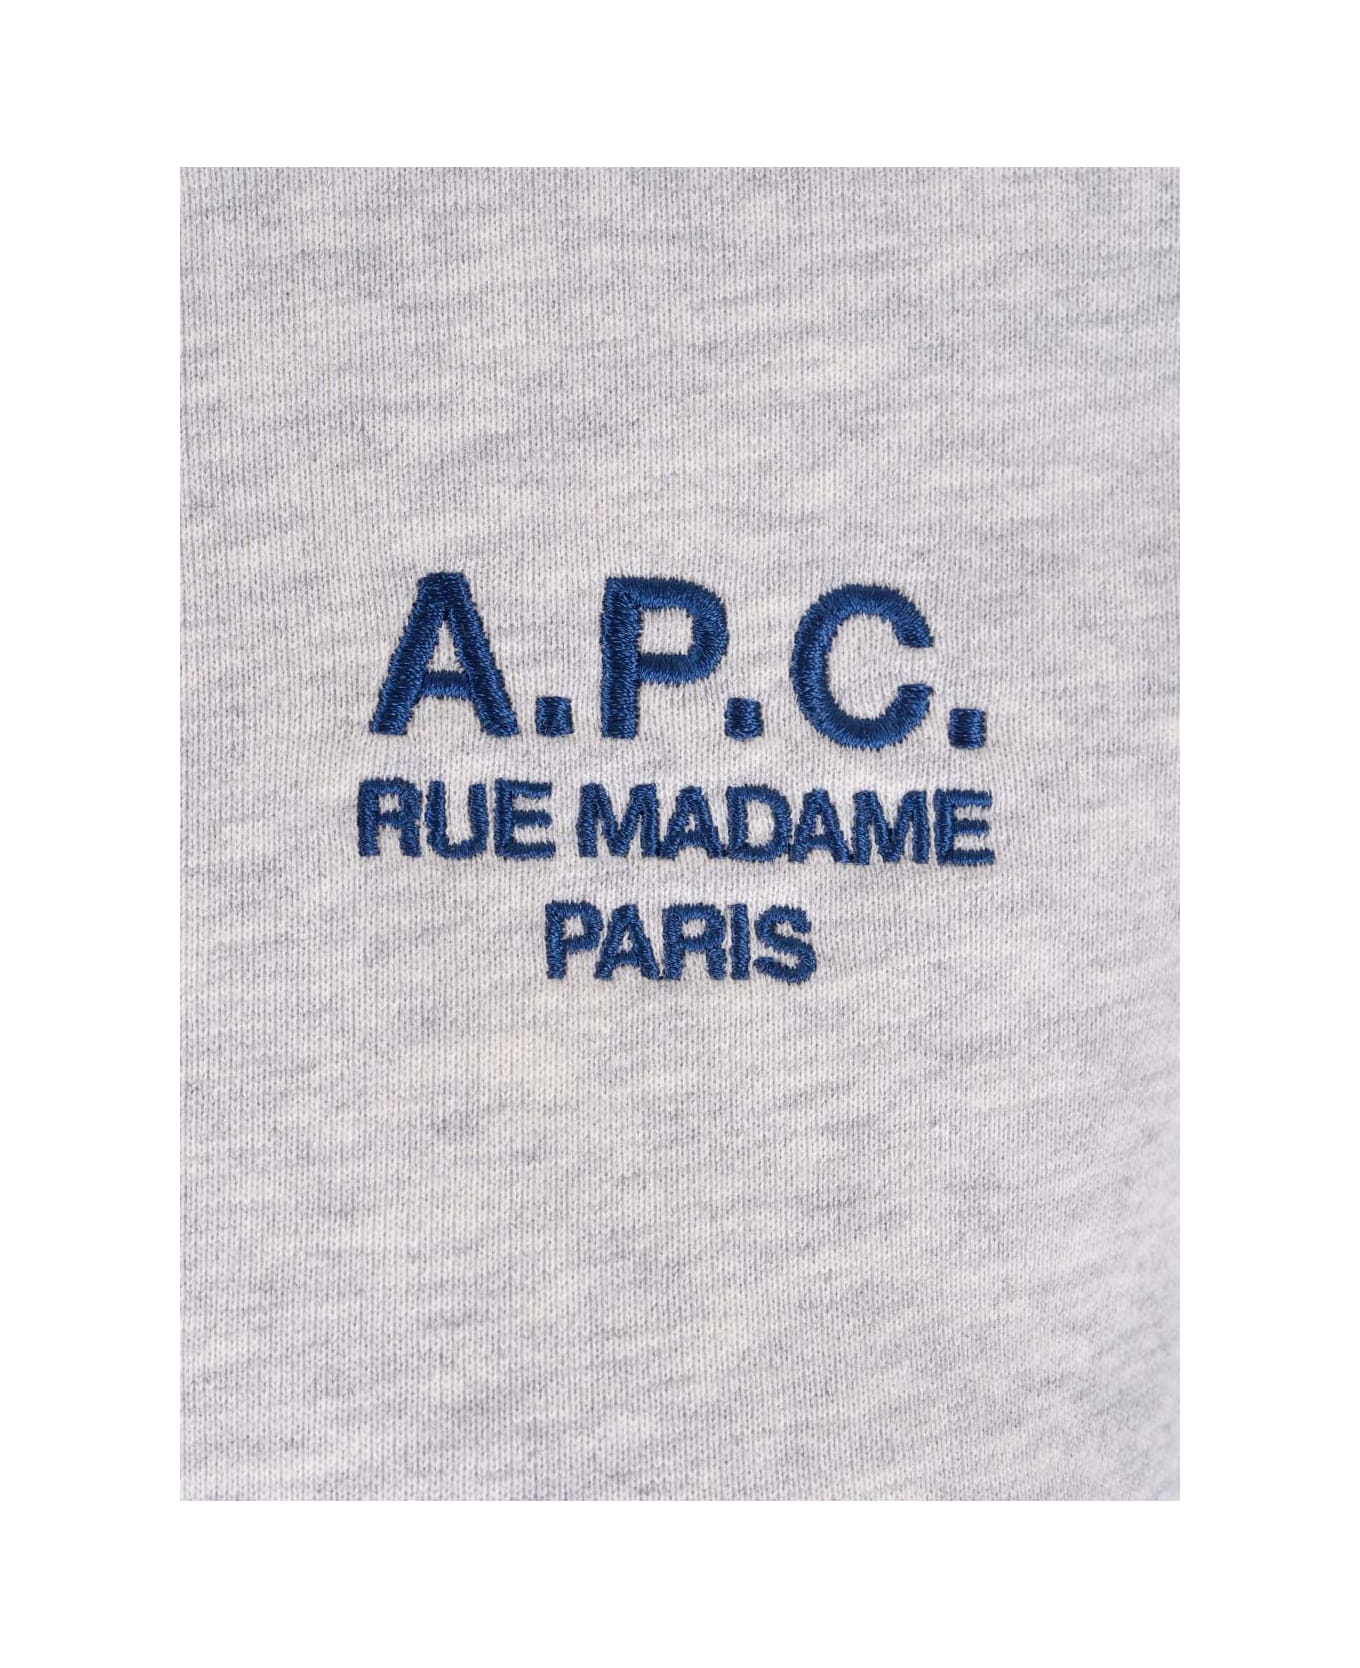 A.P.C. Skye Sweatshirt - Grey